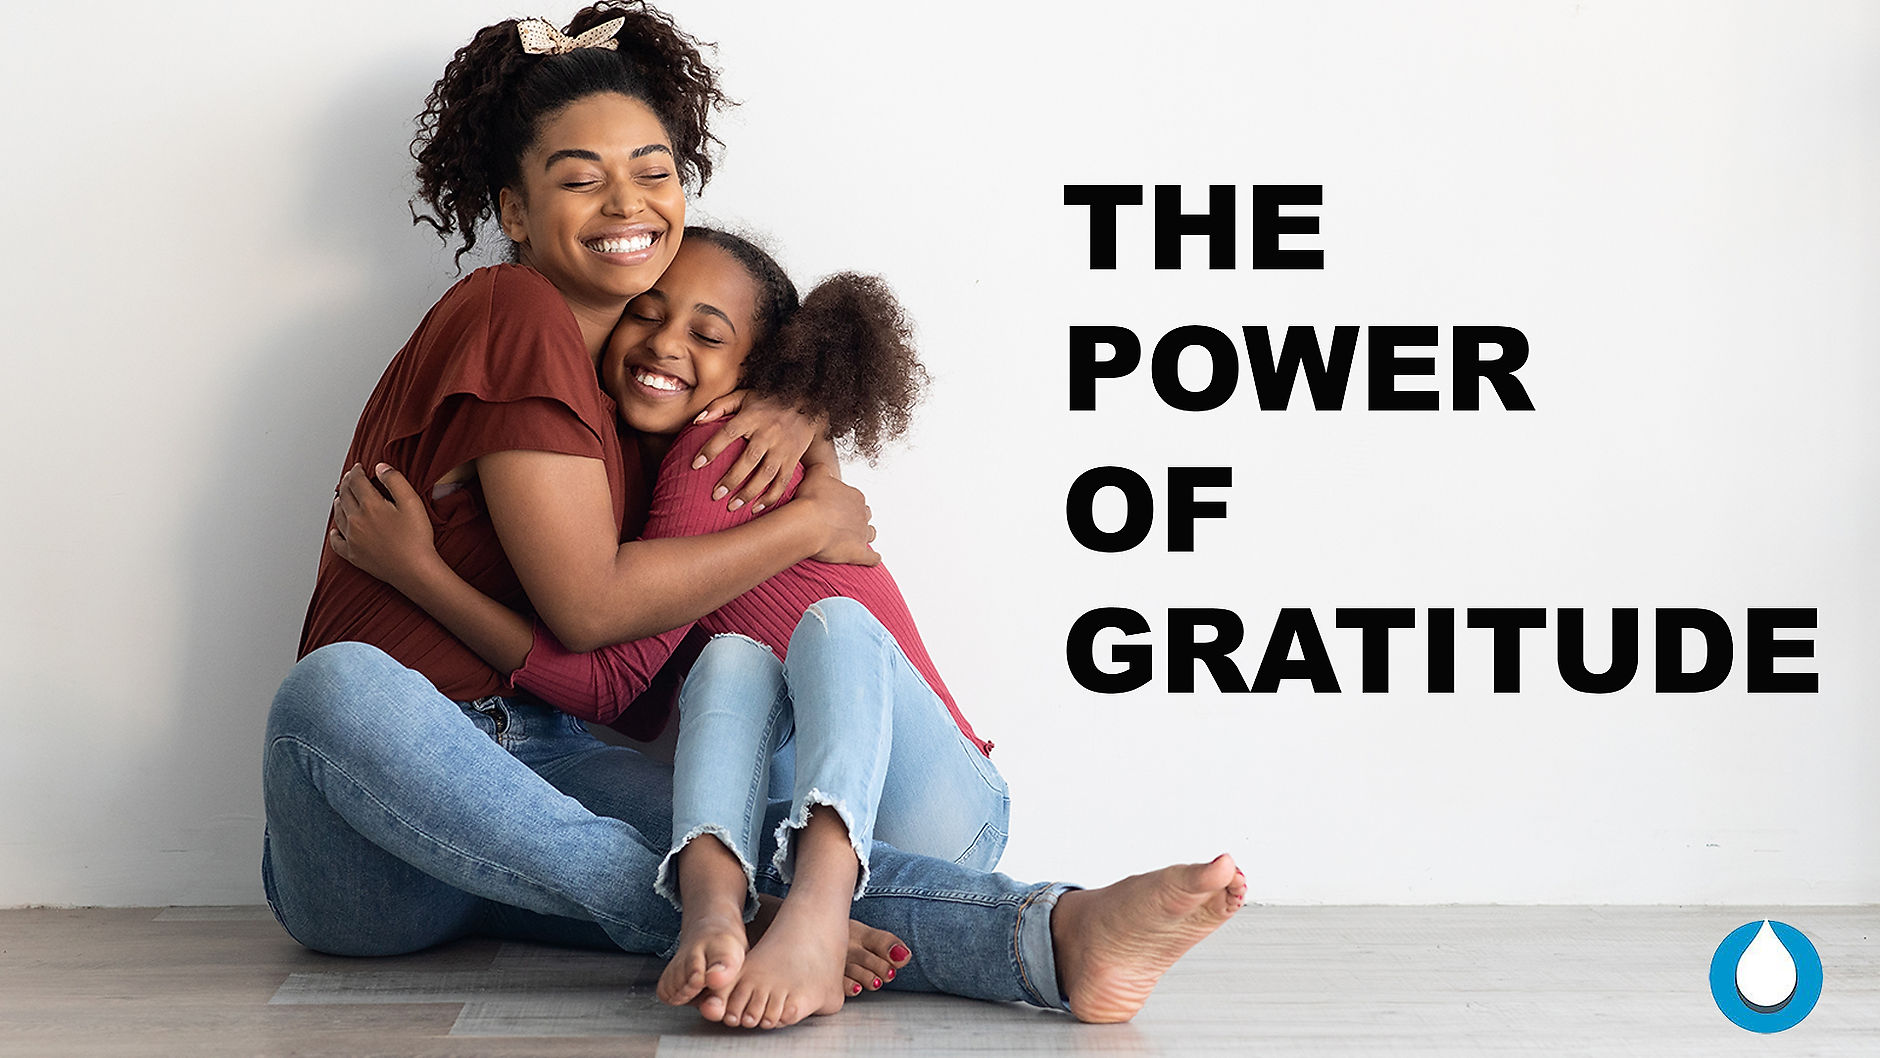 THE POWER OF GRATITUDE